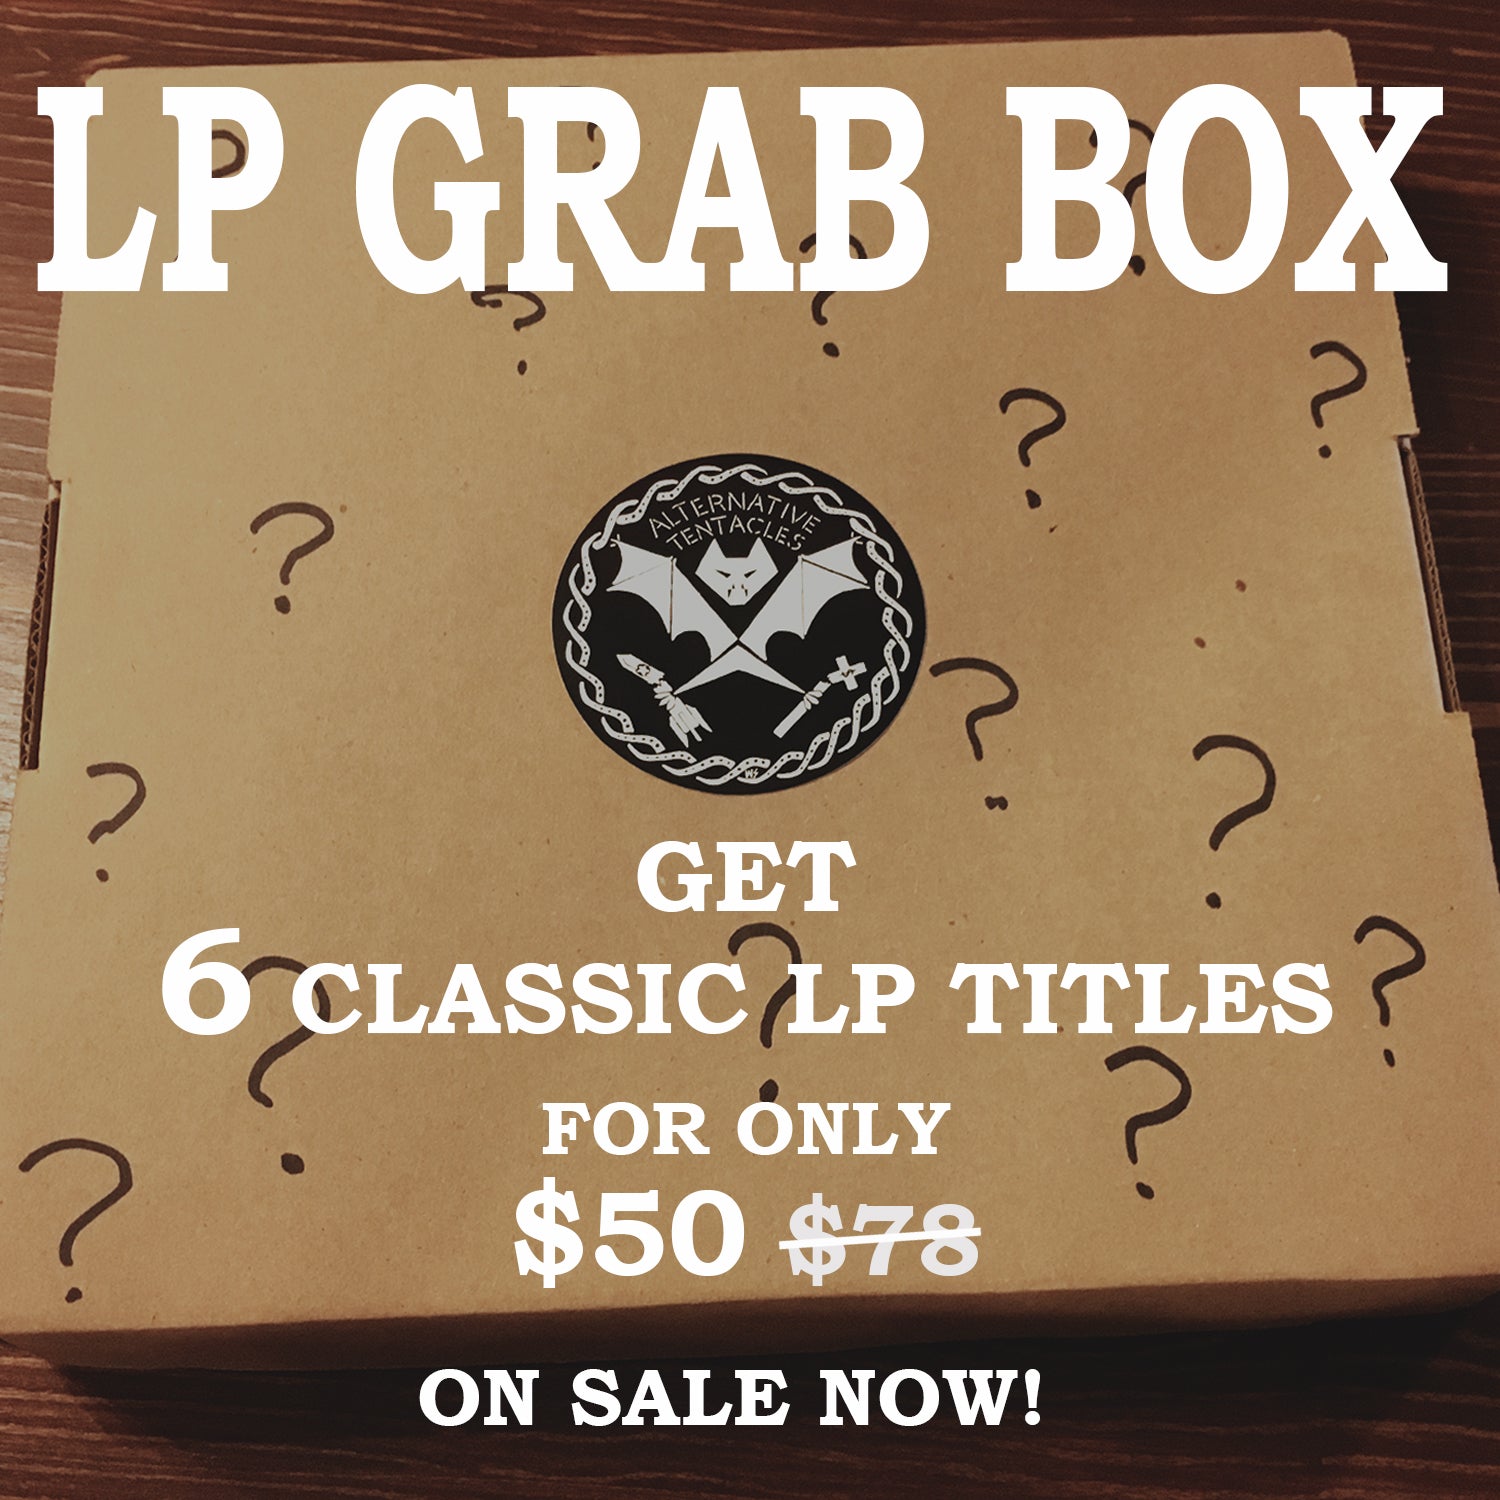 THE LP GRAB BOX  SALE!